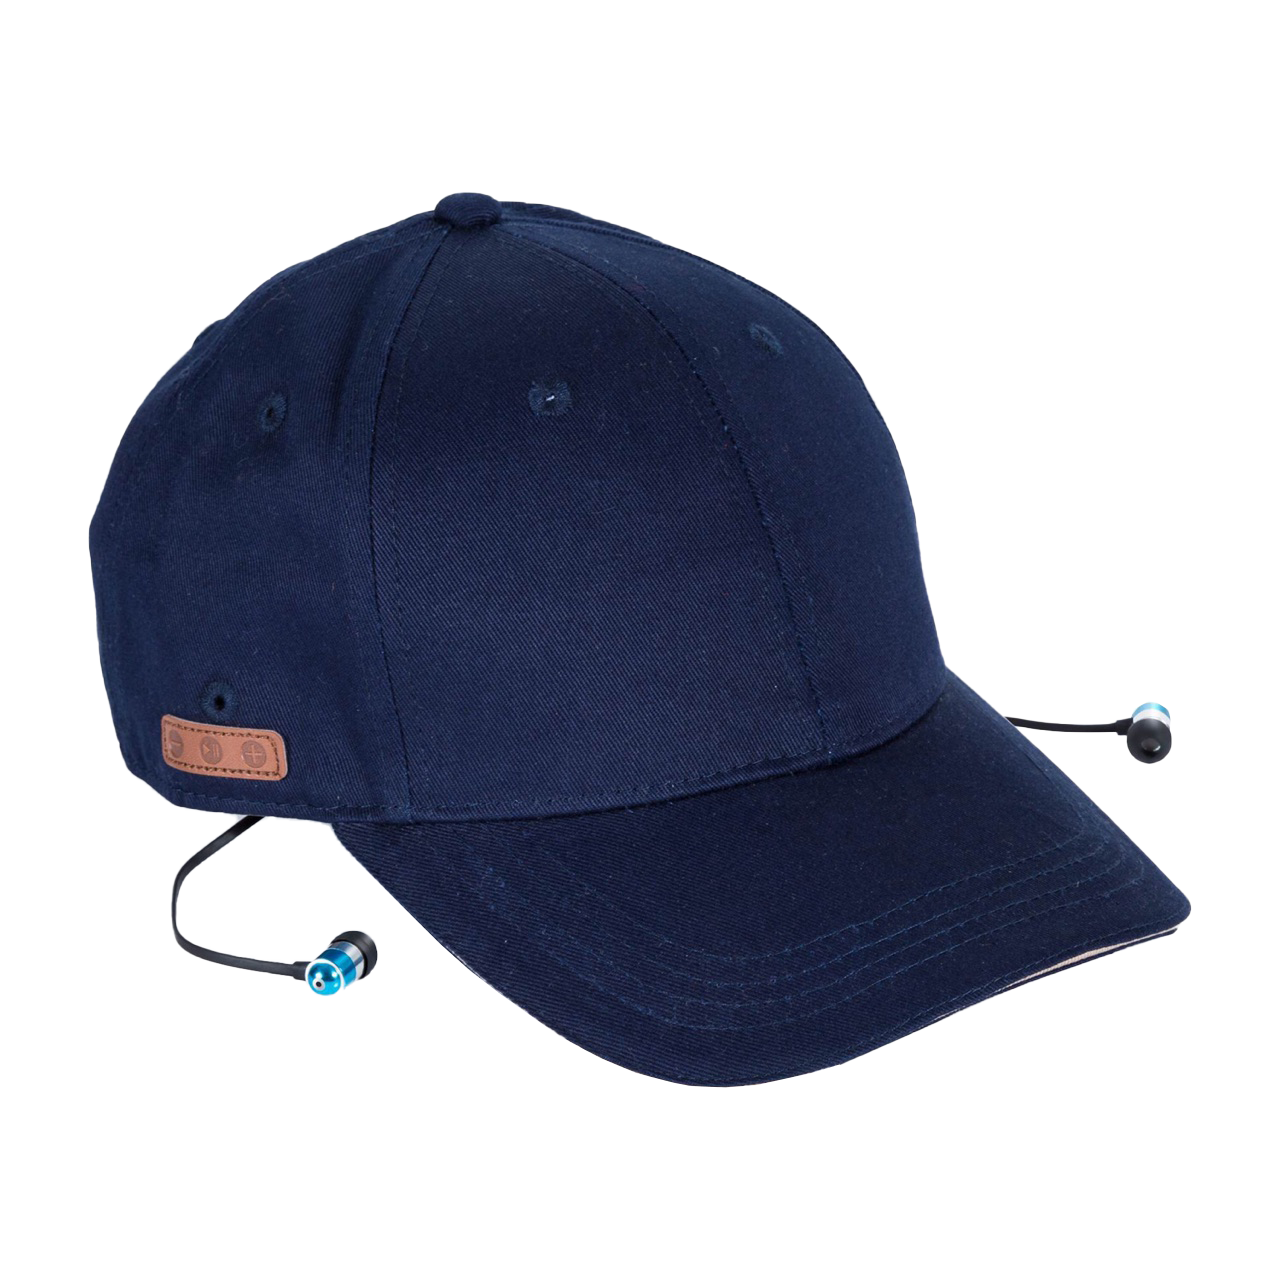 DIGGER – Bluetooth-Kappe mit Kopfhören und Mikrofon